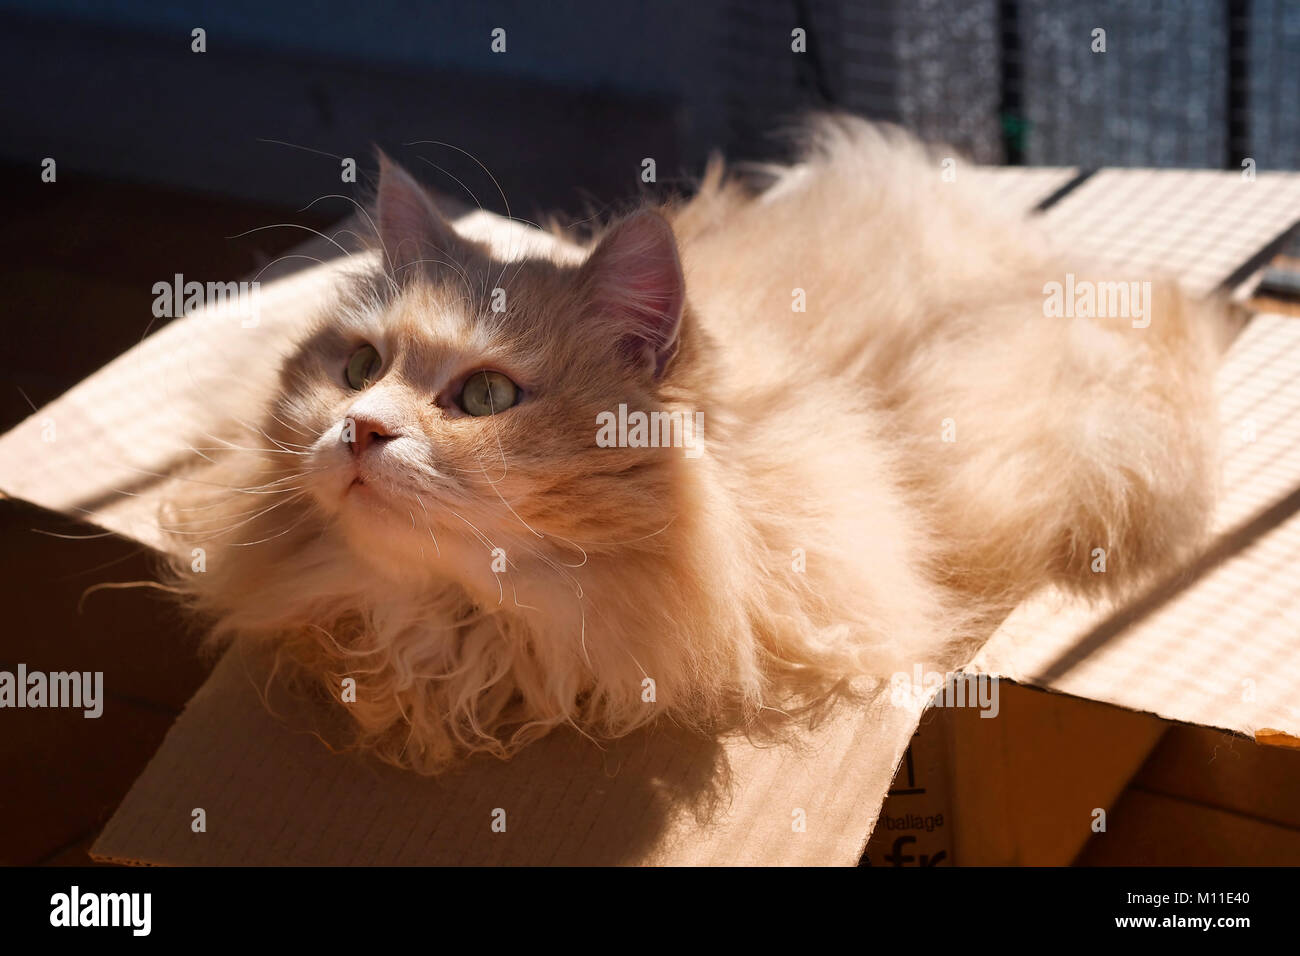 Funny scene. A Siberian cat in a paper box. Stock Photo